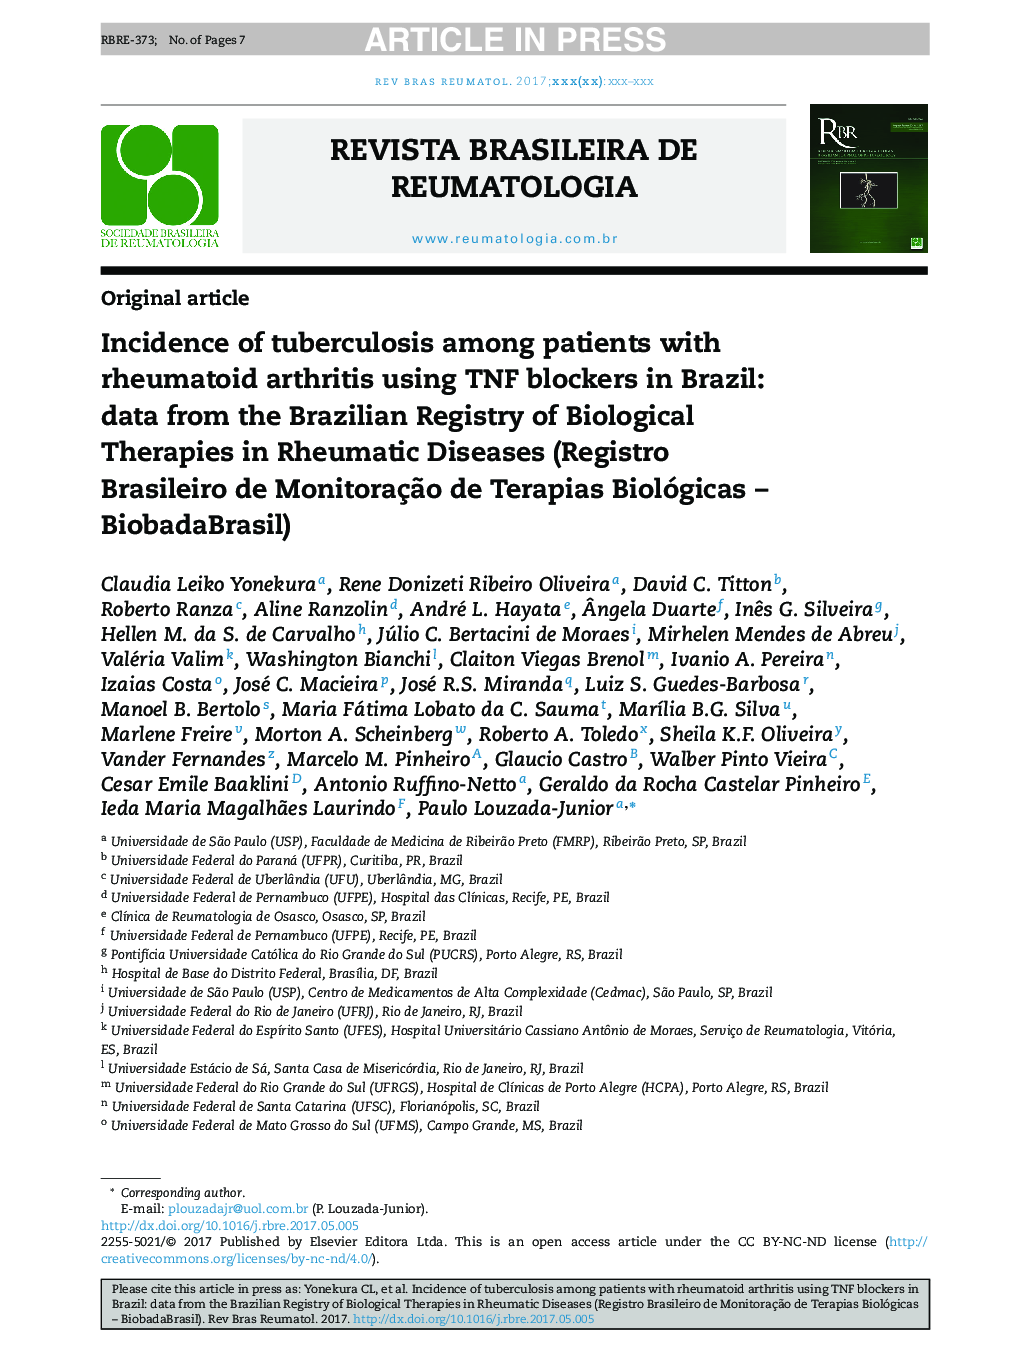 Incidence of tuberculosis among patients with rheumatoid arthritis using TNF blockers in Brazil: data from the Brazilian Registry of Biological Therapies in Rheumatic Diseases (Registro Brasileiro de MonitoraçÃ£o de Terapias Biológicas - BiobadaBrasil)